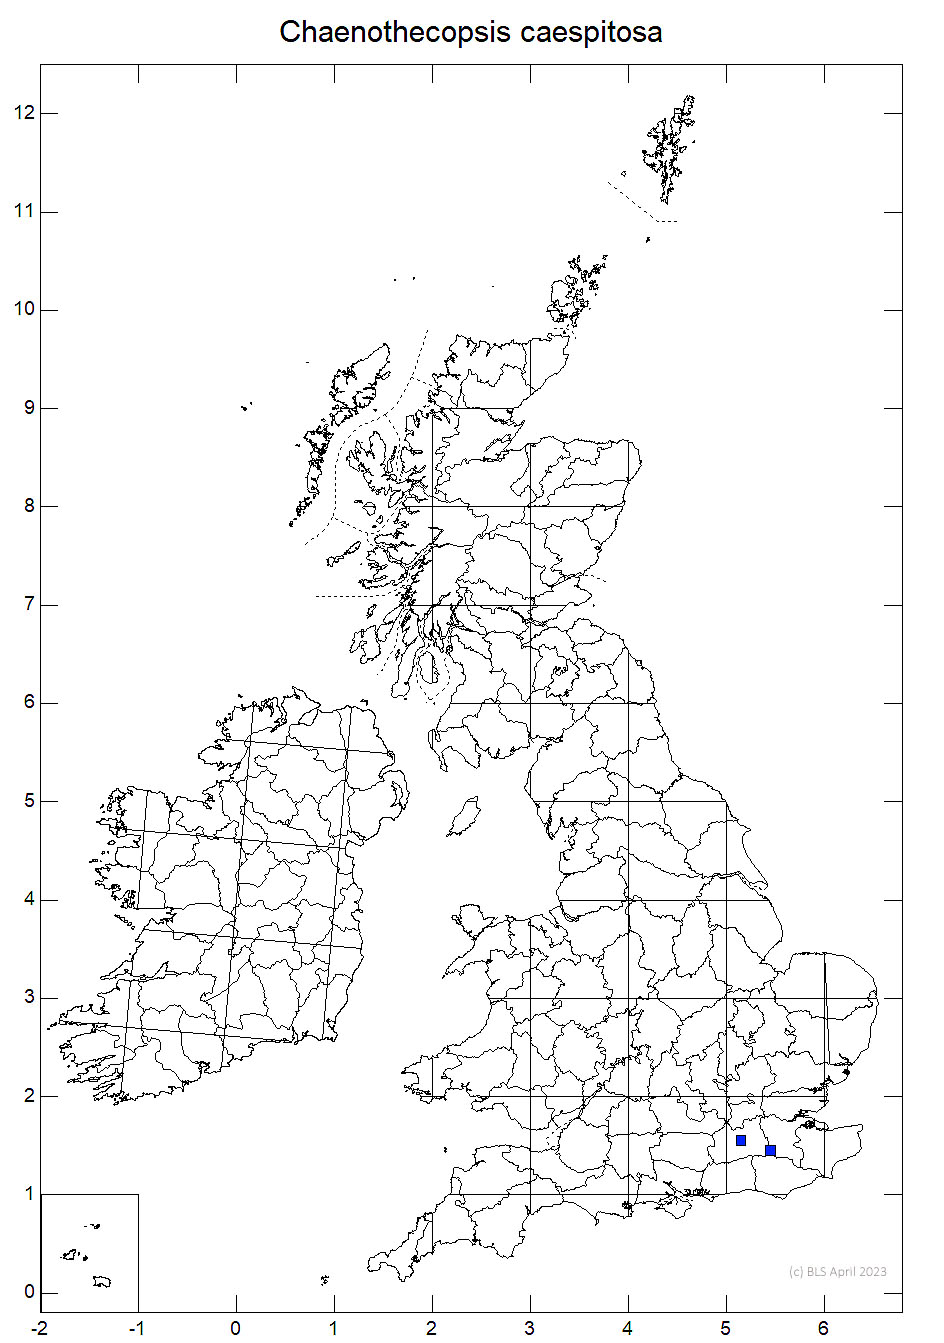 Chaenothecopsis caespitosa 10km sq distribution map